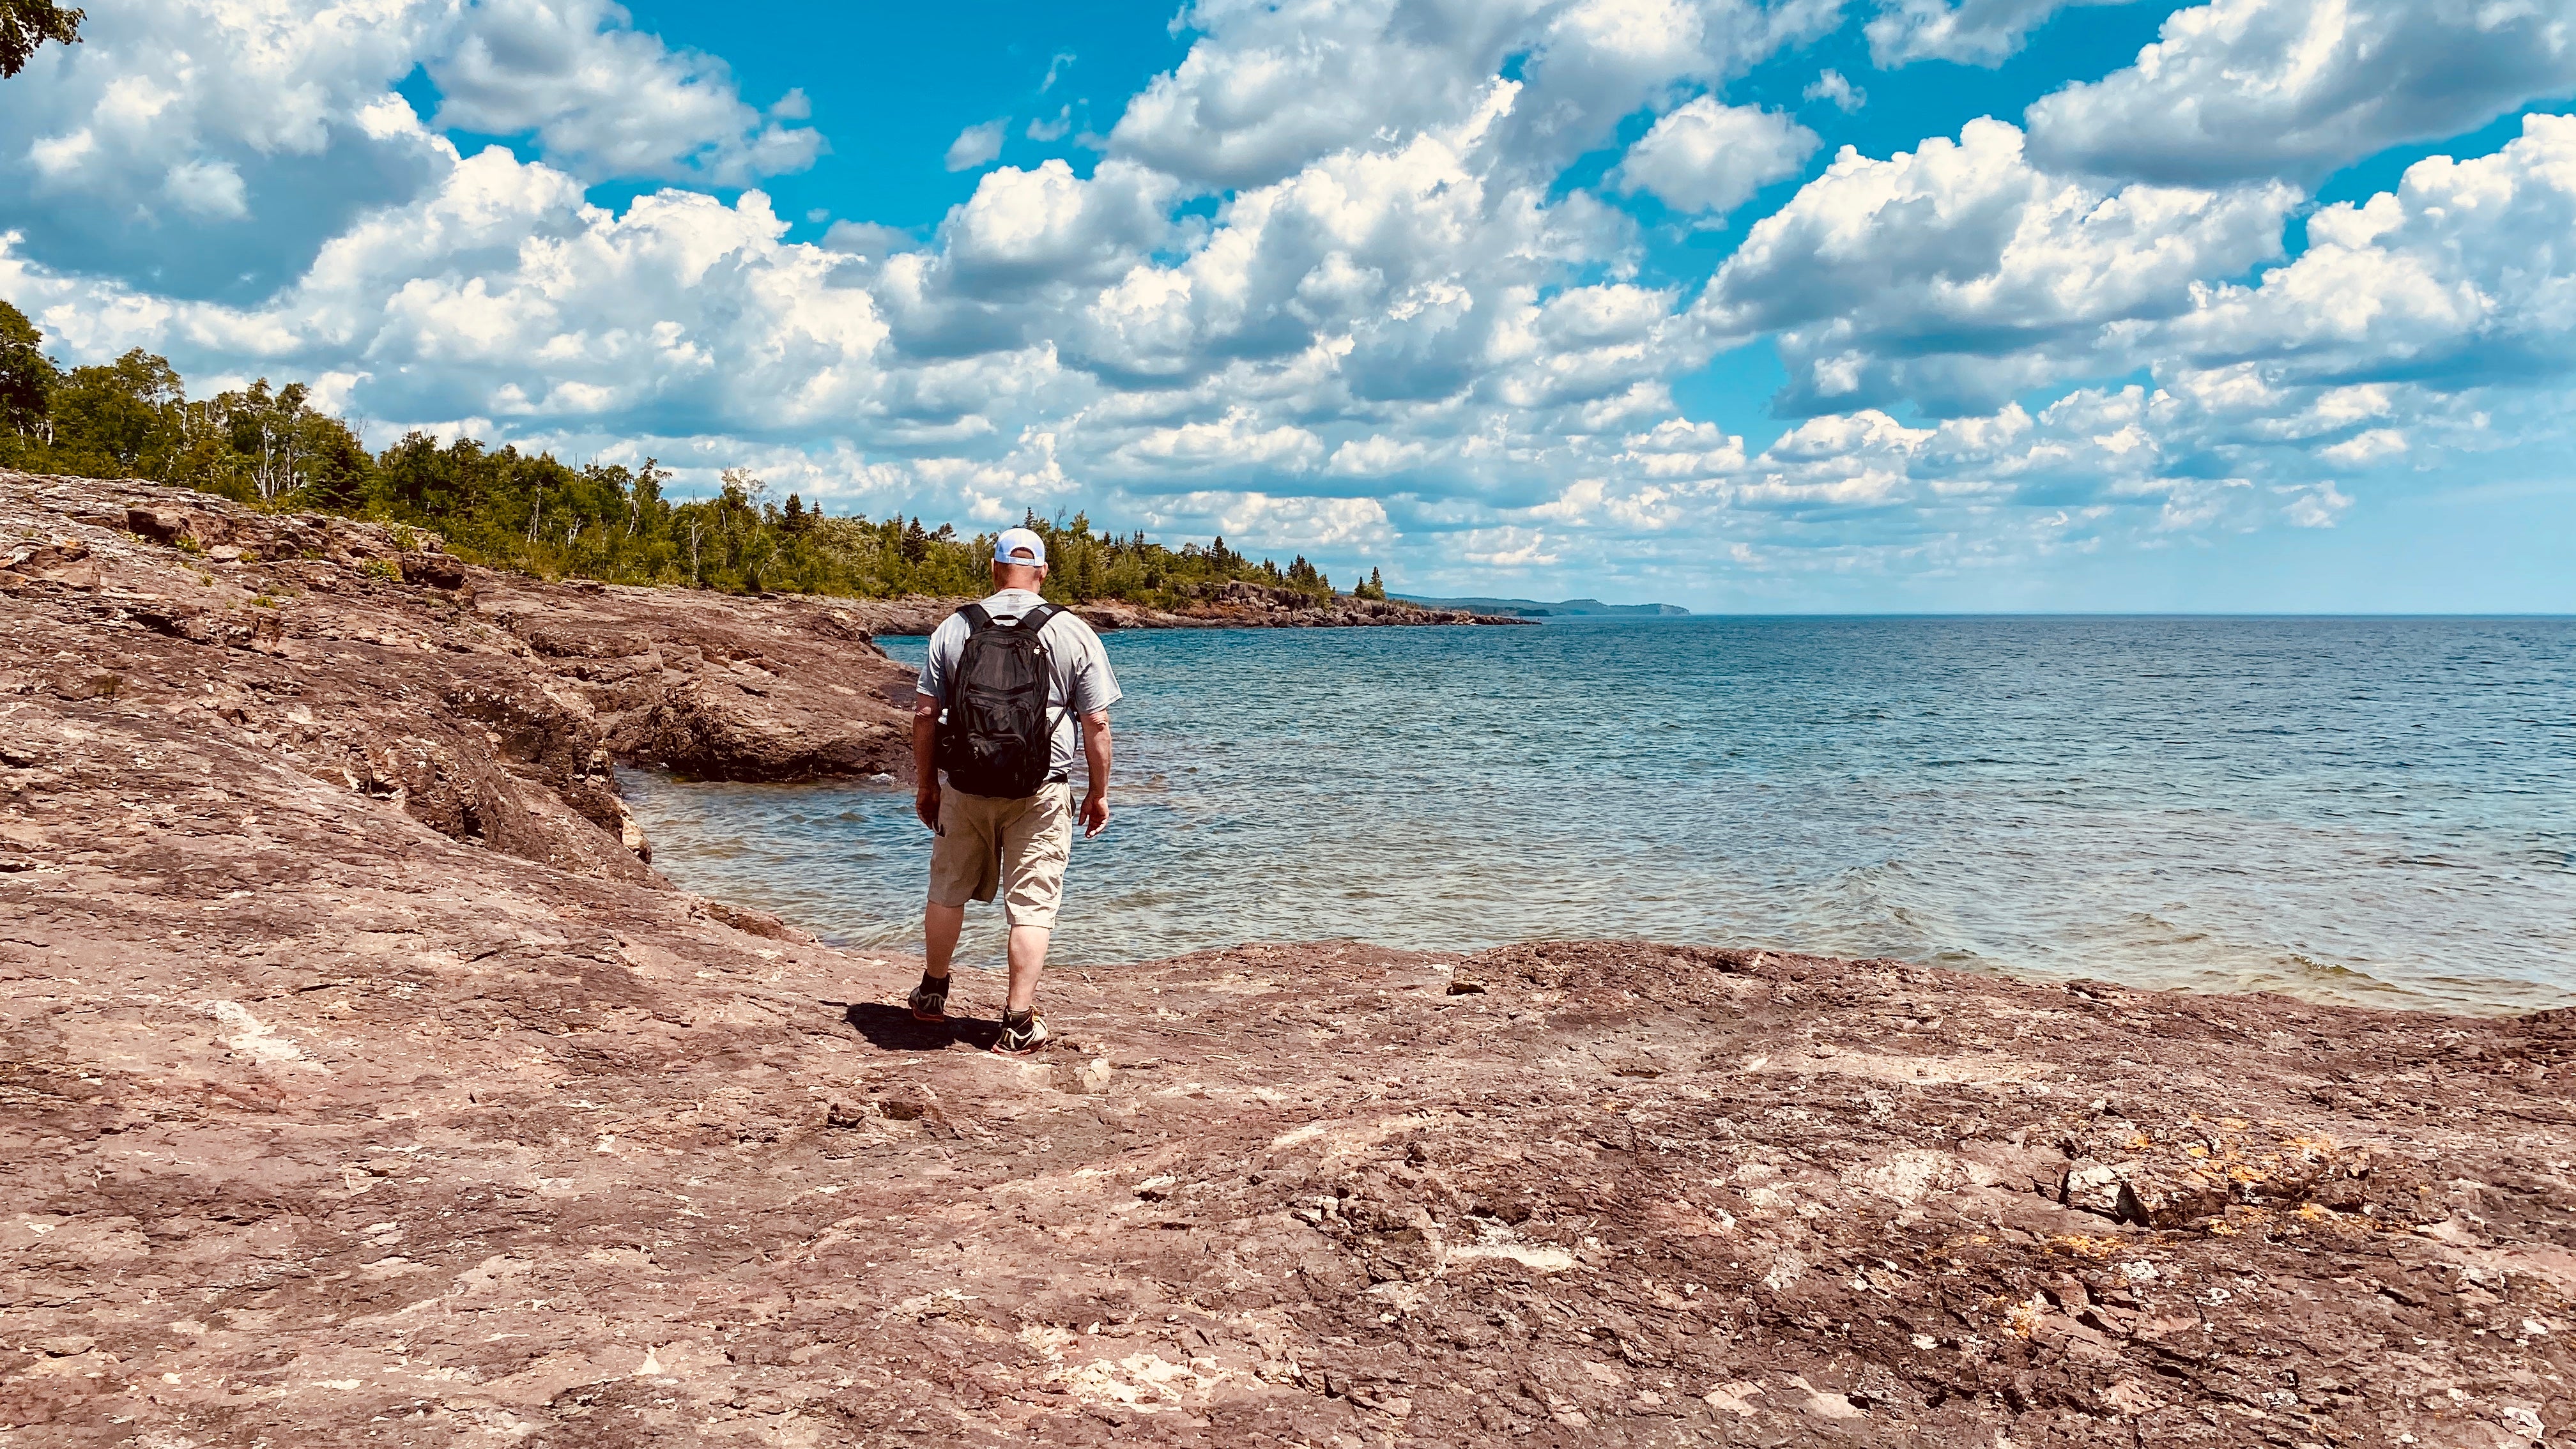 The Picnic Area on Lake Superior